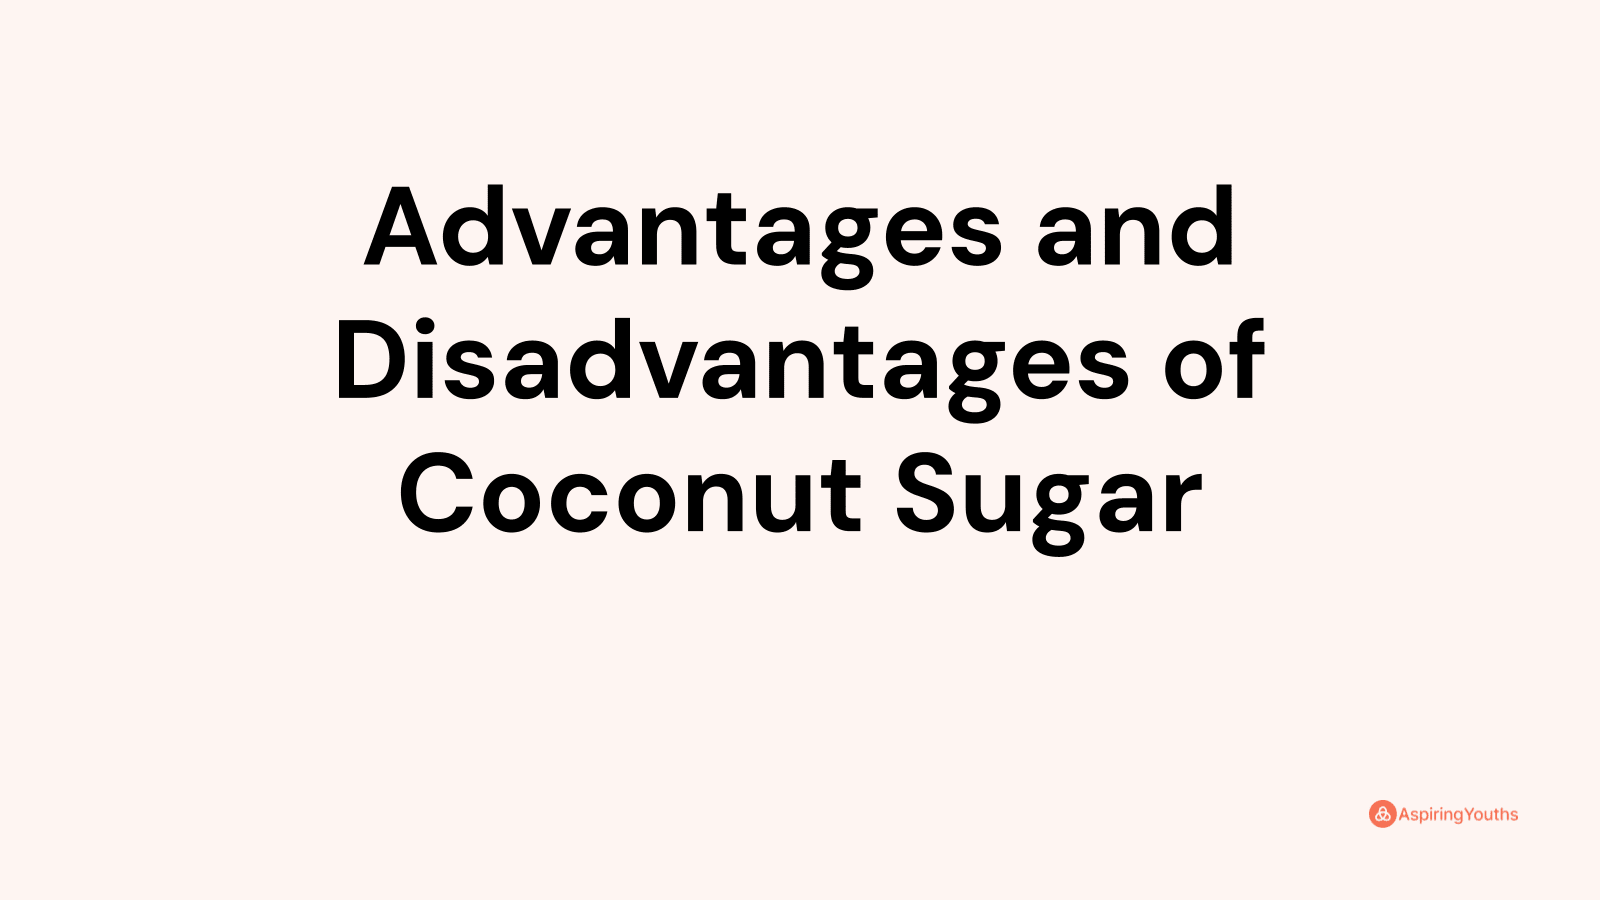 Advantages and disadvantages of Coconut Sugar